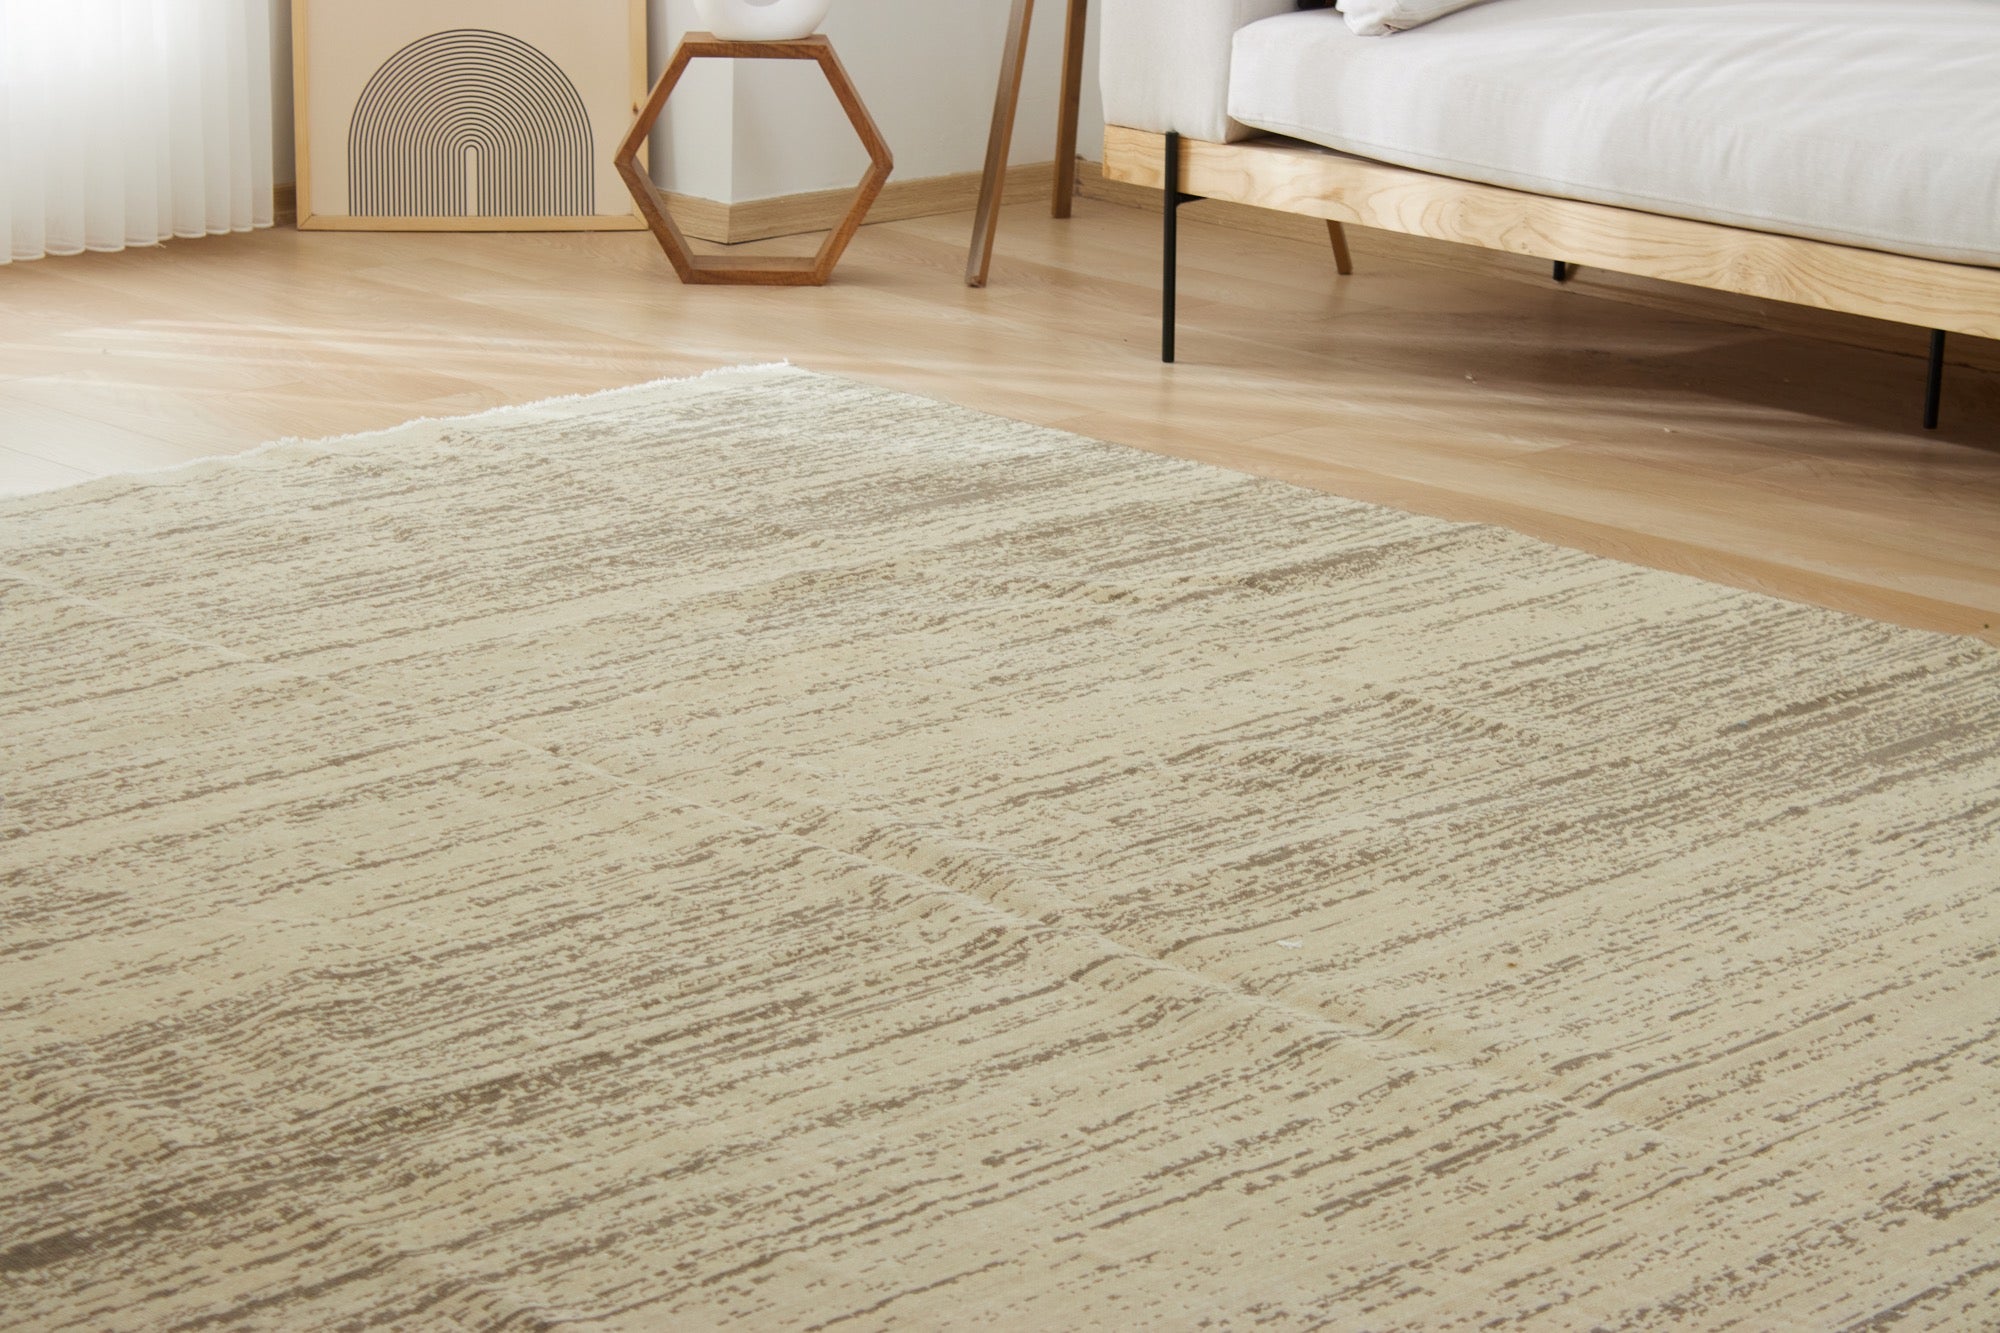 Kristi | New Oriental-Inspired Artisan Carpet | Kuden Rugs